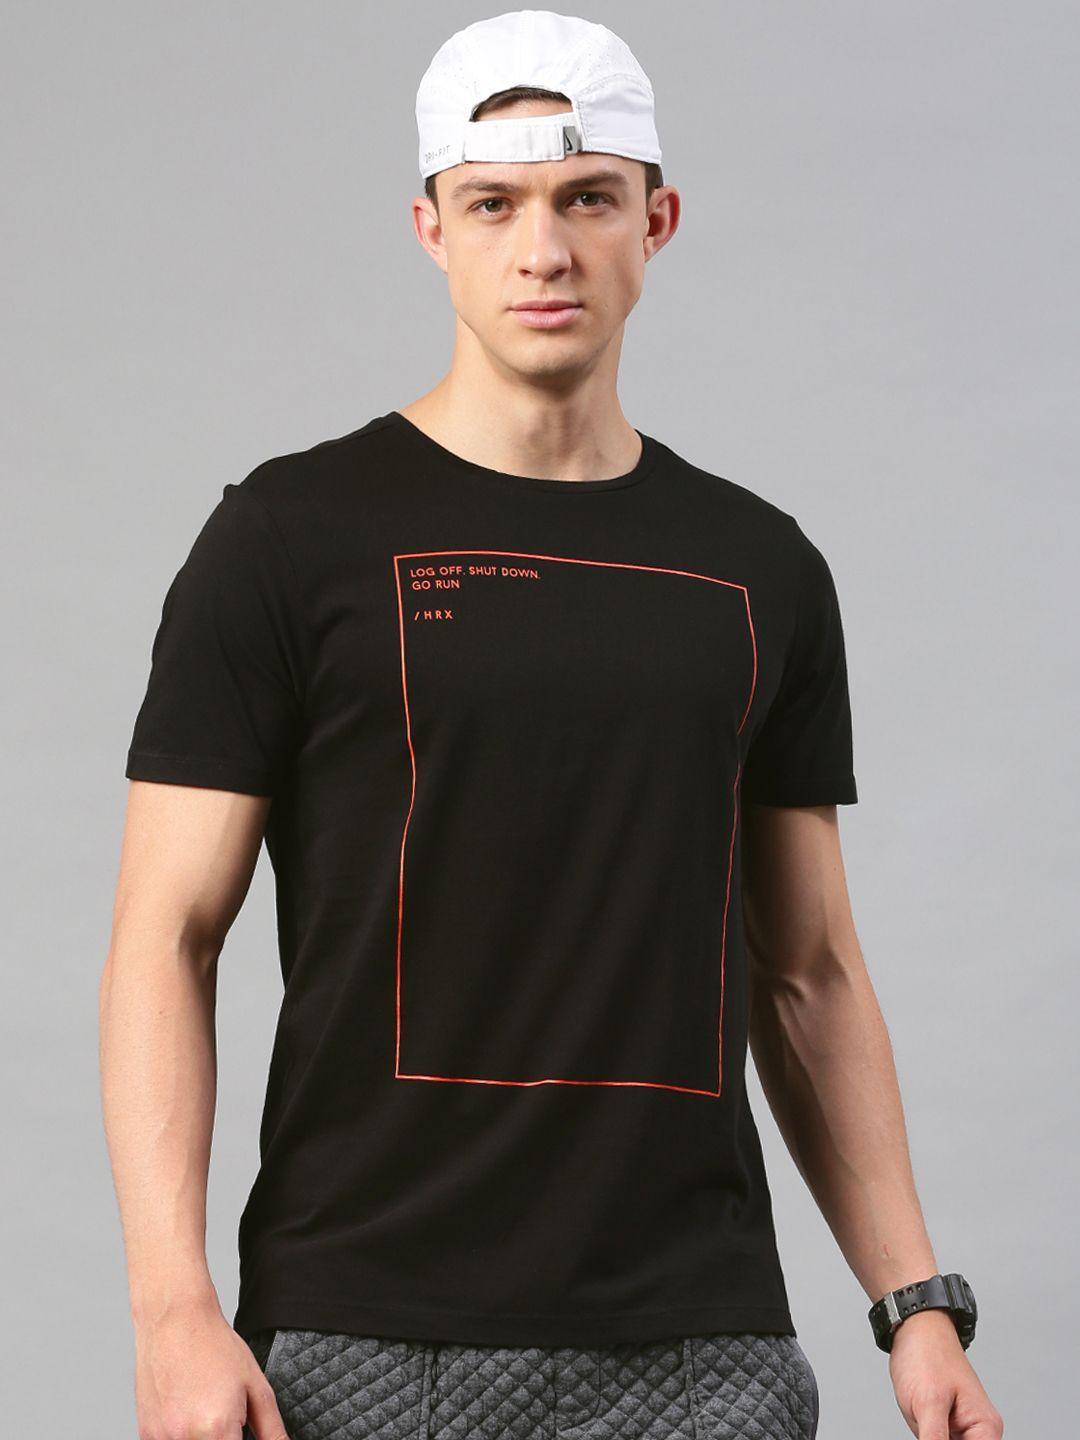 hrx by hrithik roshan men black printed t-shirt